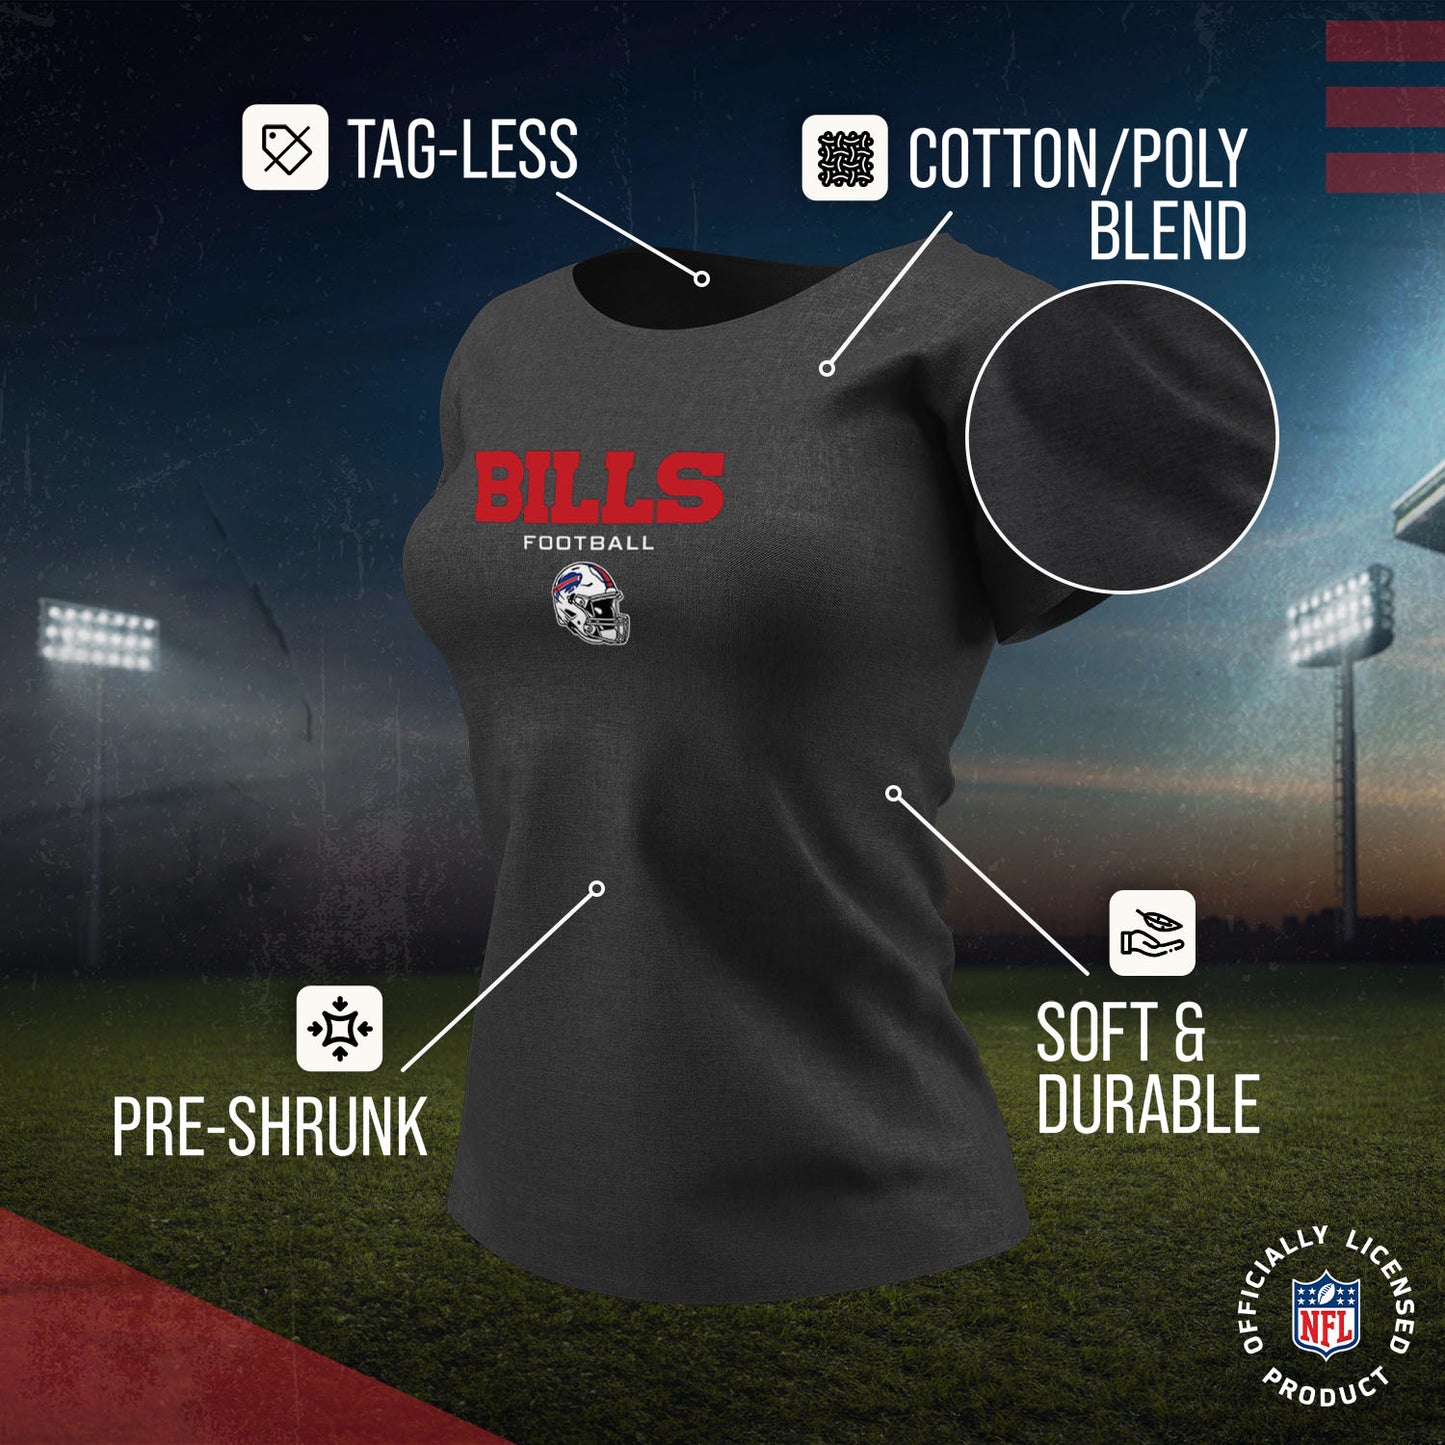 Buffalo Bills Women's NFL Football Helmet Short Sleeve Tagless T-Shirt - Charcoal